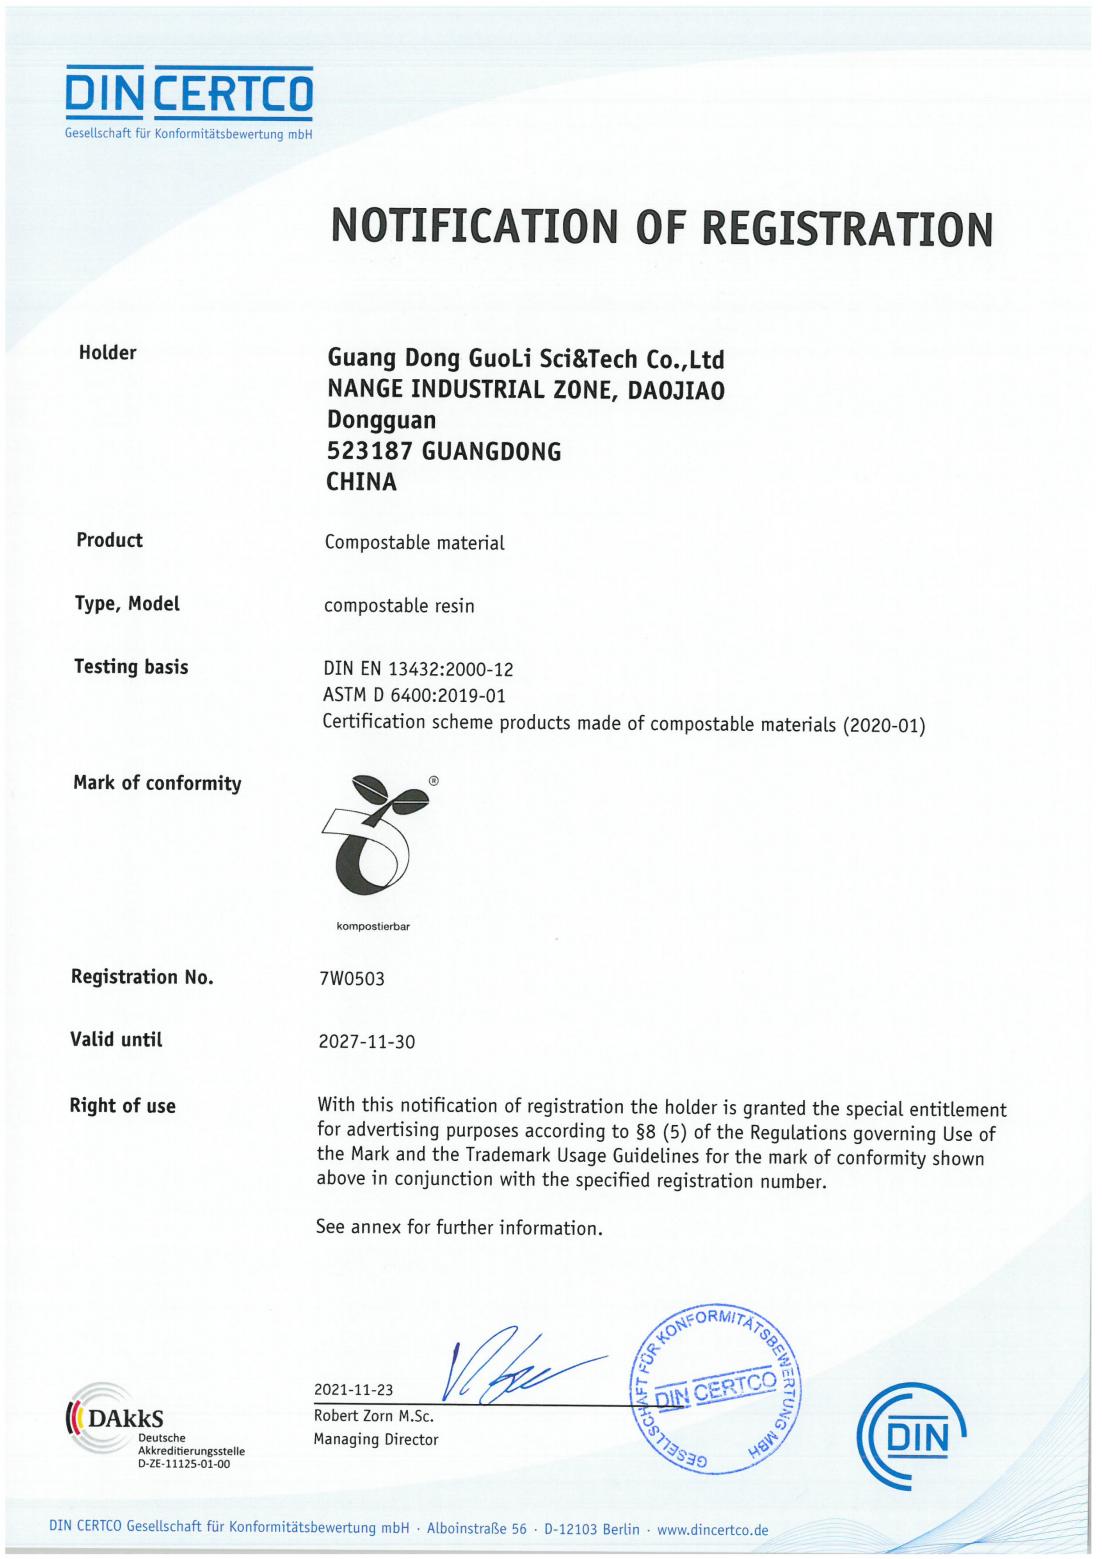 Guoli degradable material passed DIN certco certification